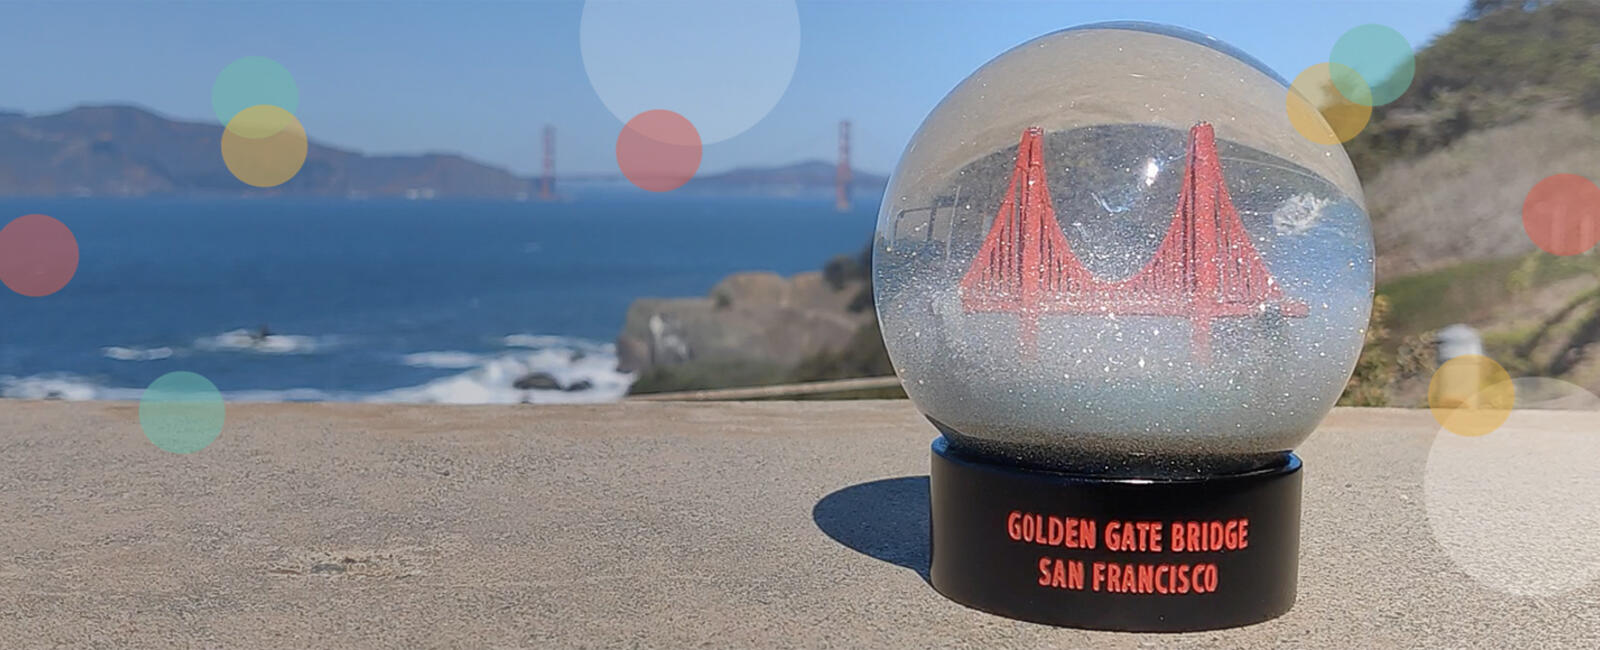 Golden Gate Bridge fog globe with Golden Gate Bridge in the background.